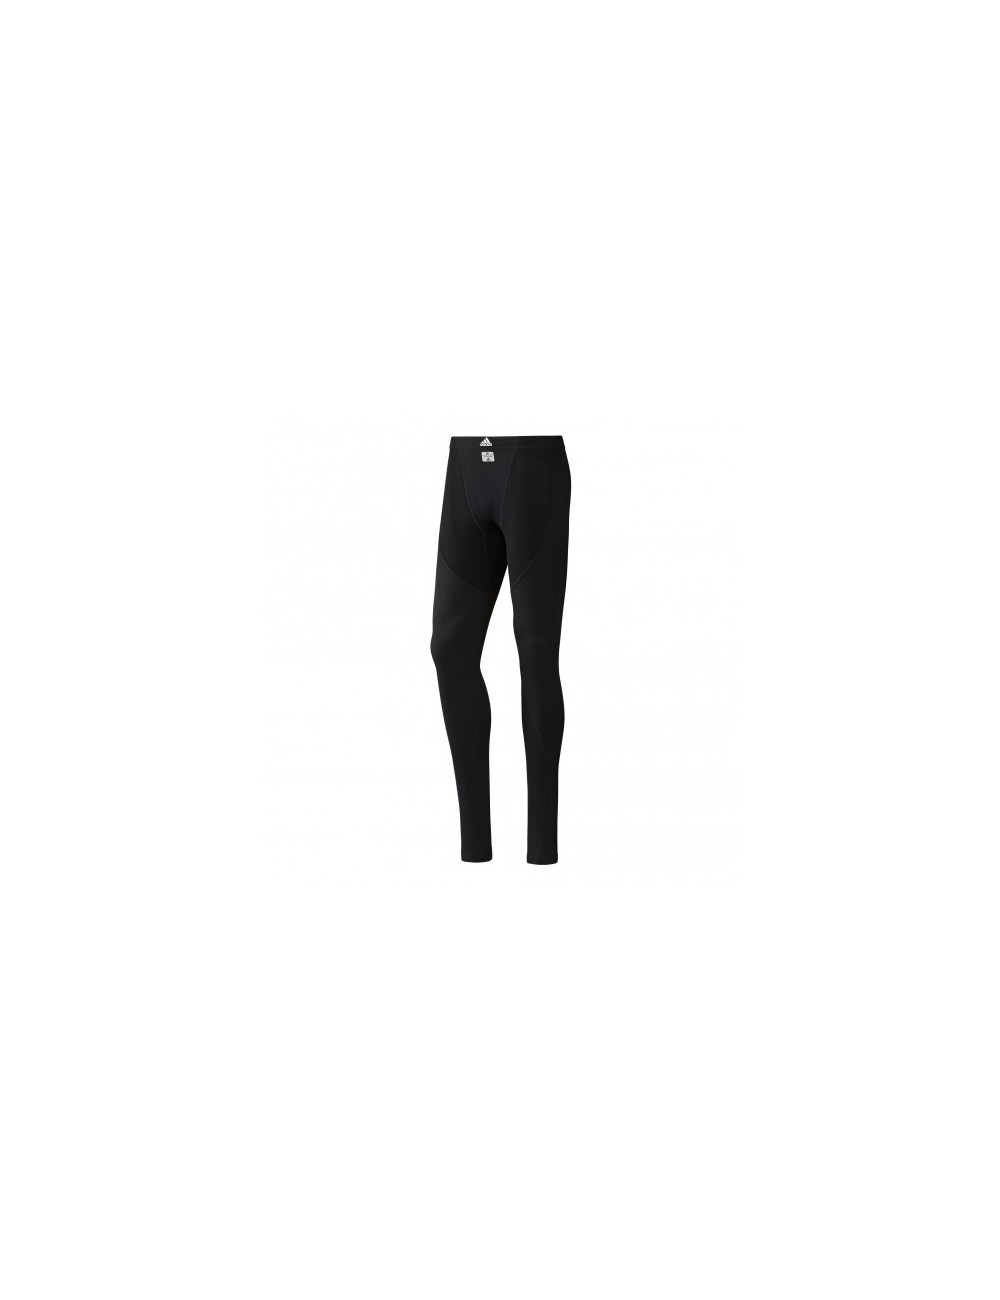 Pantalon Adidas CLIMACOOL NOMEX® noir